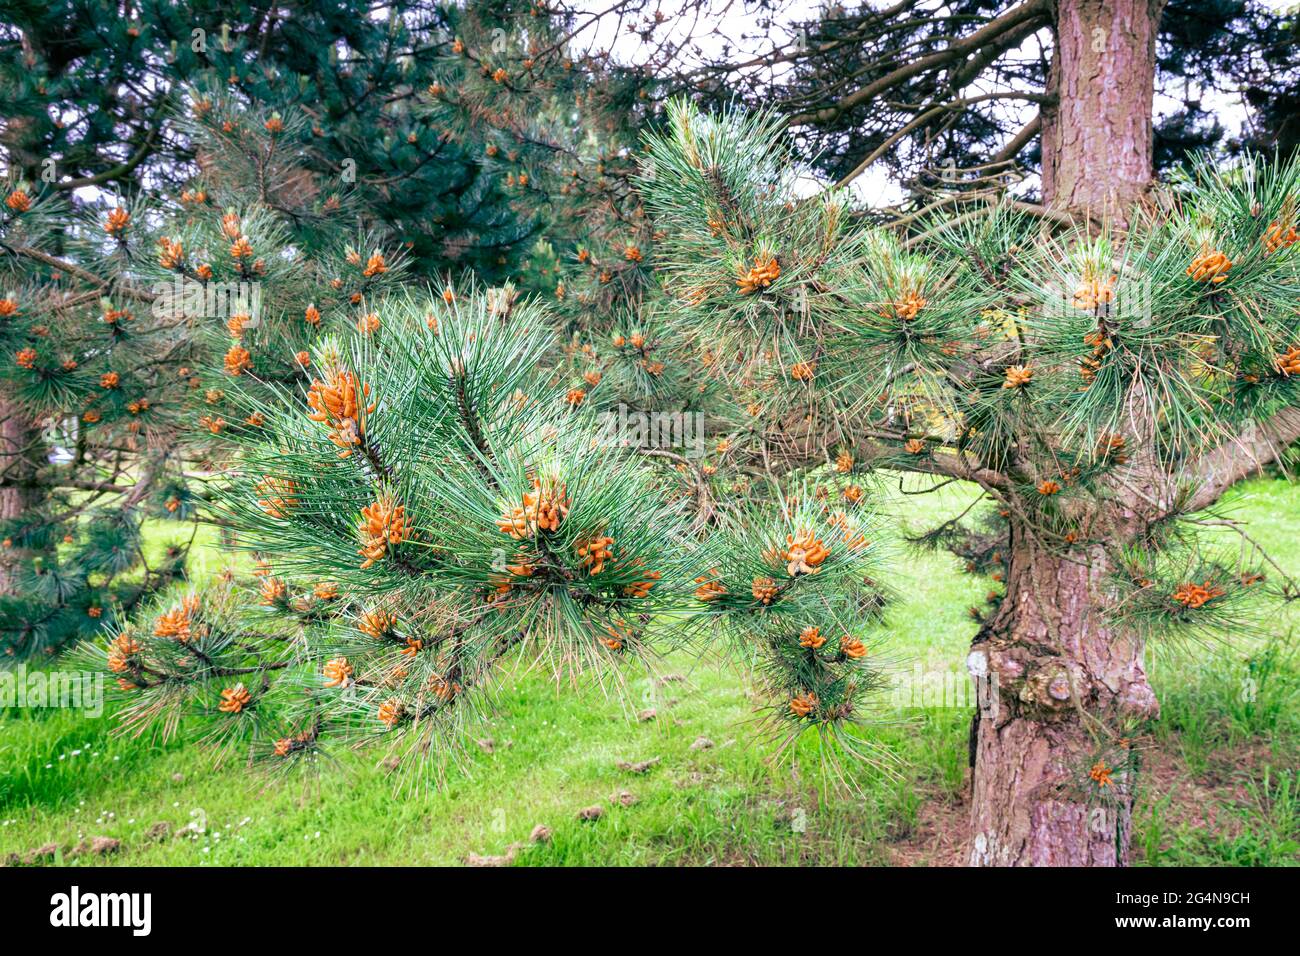 Flowering pine tree in spring Stock Photo